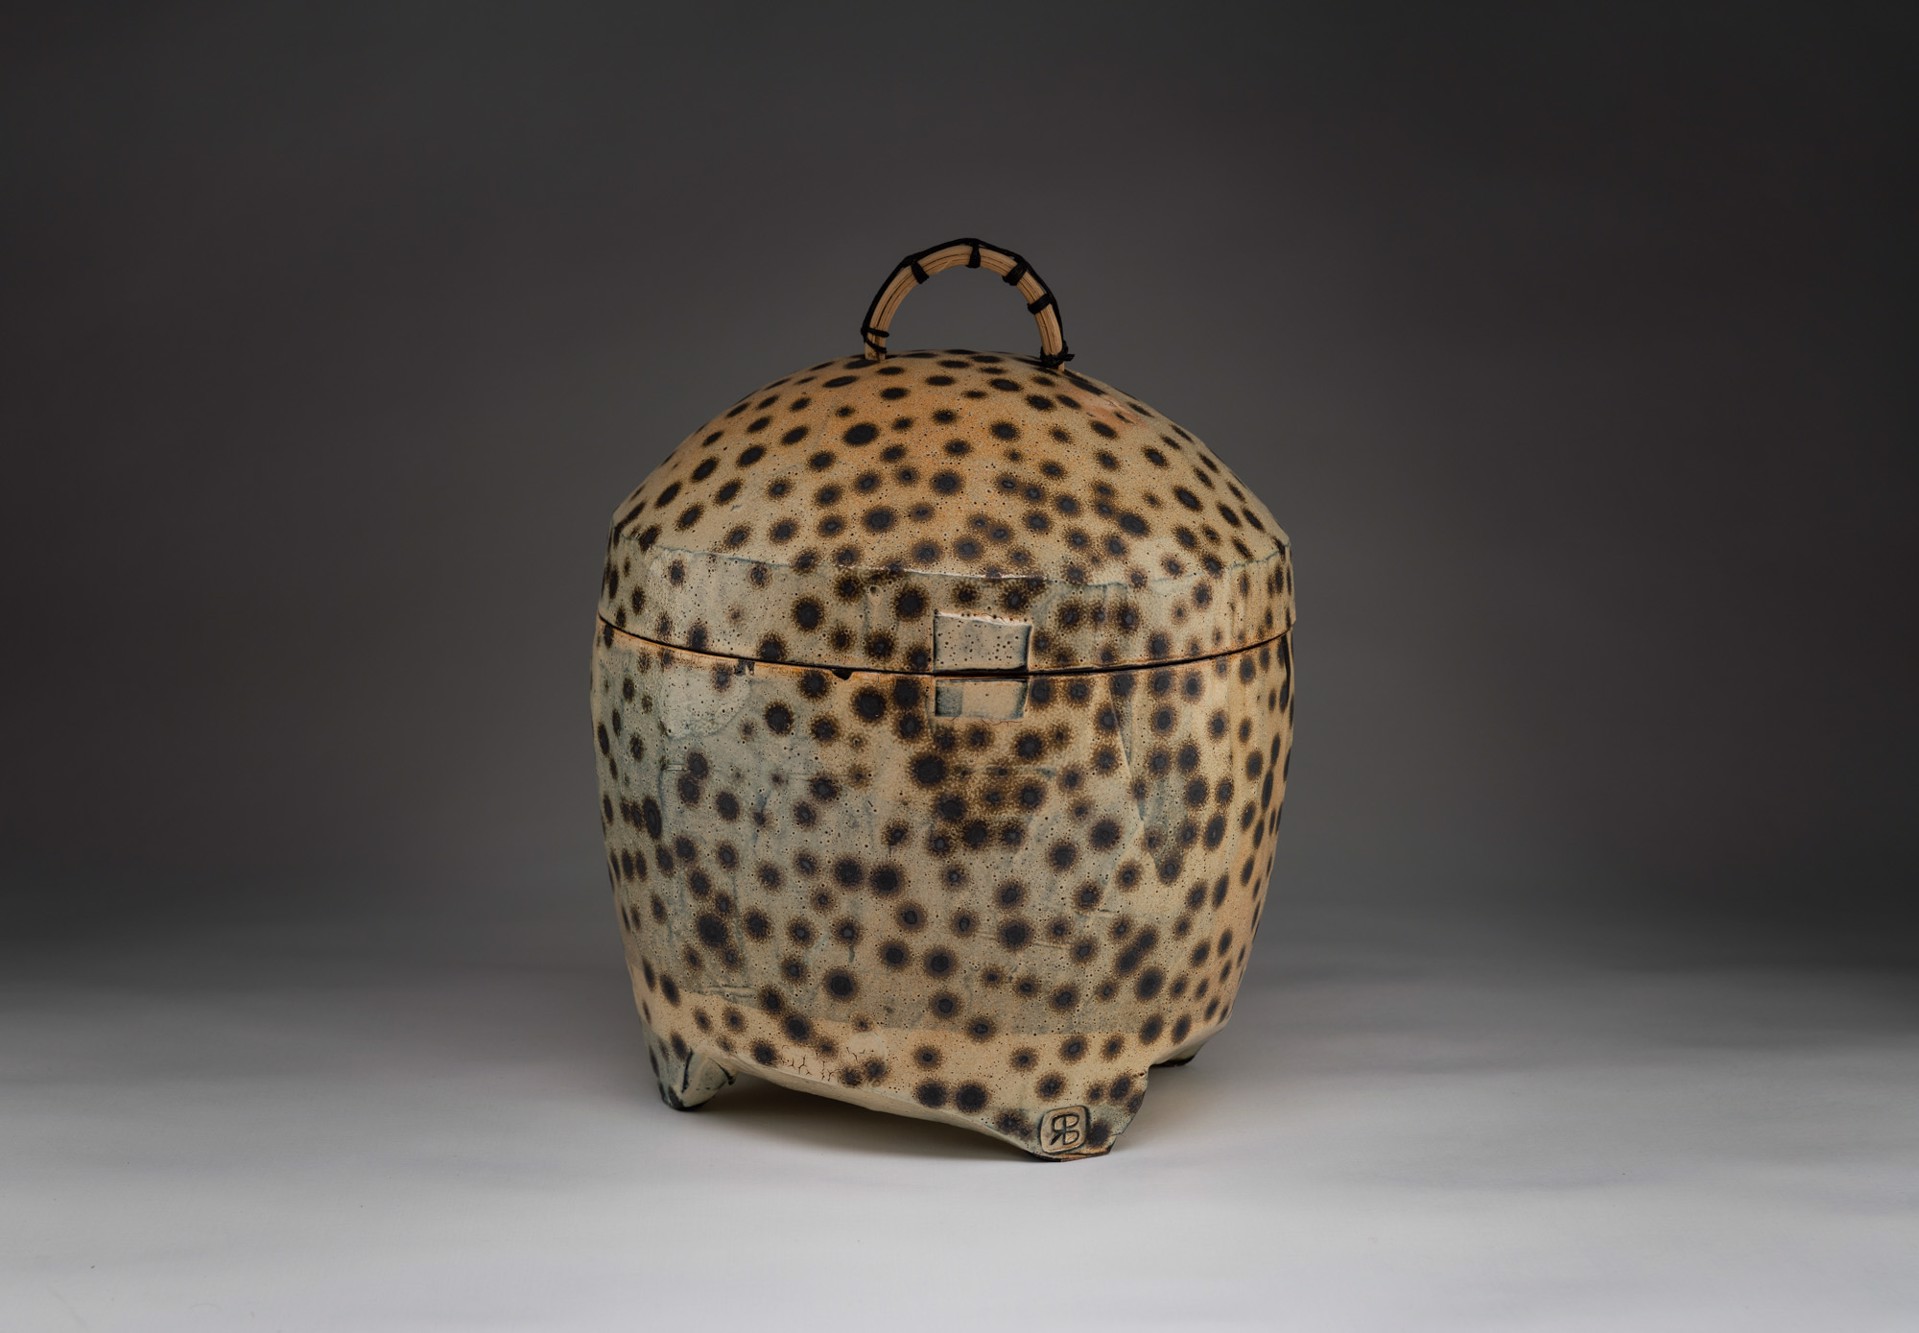 Covered Jar by Robert Brady